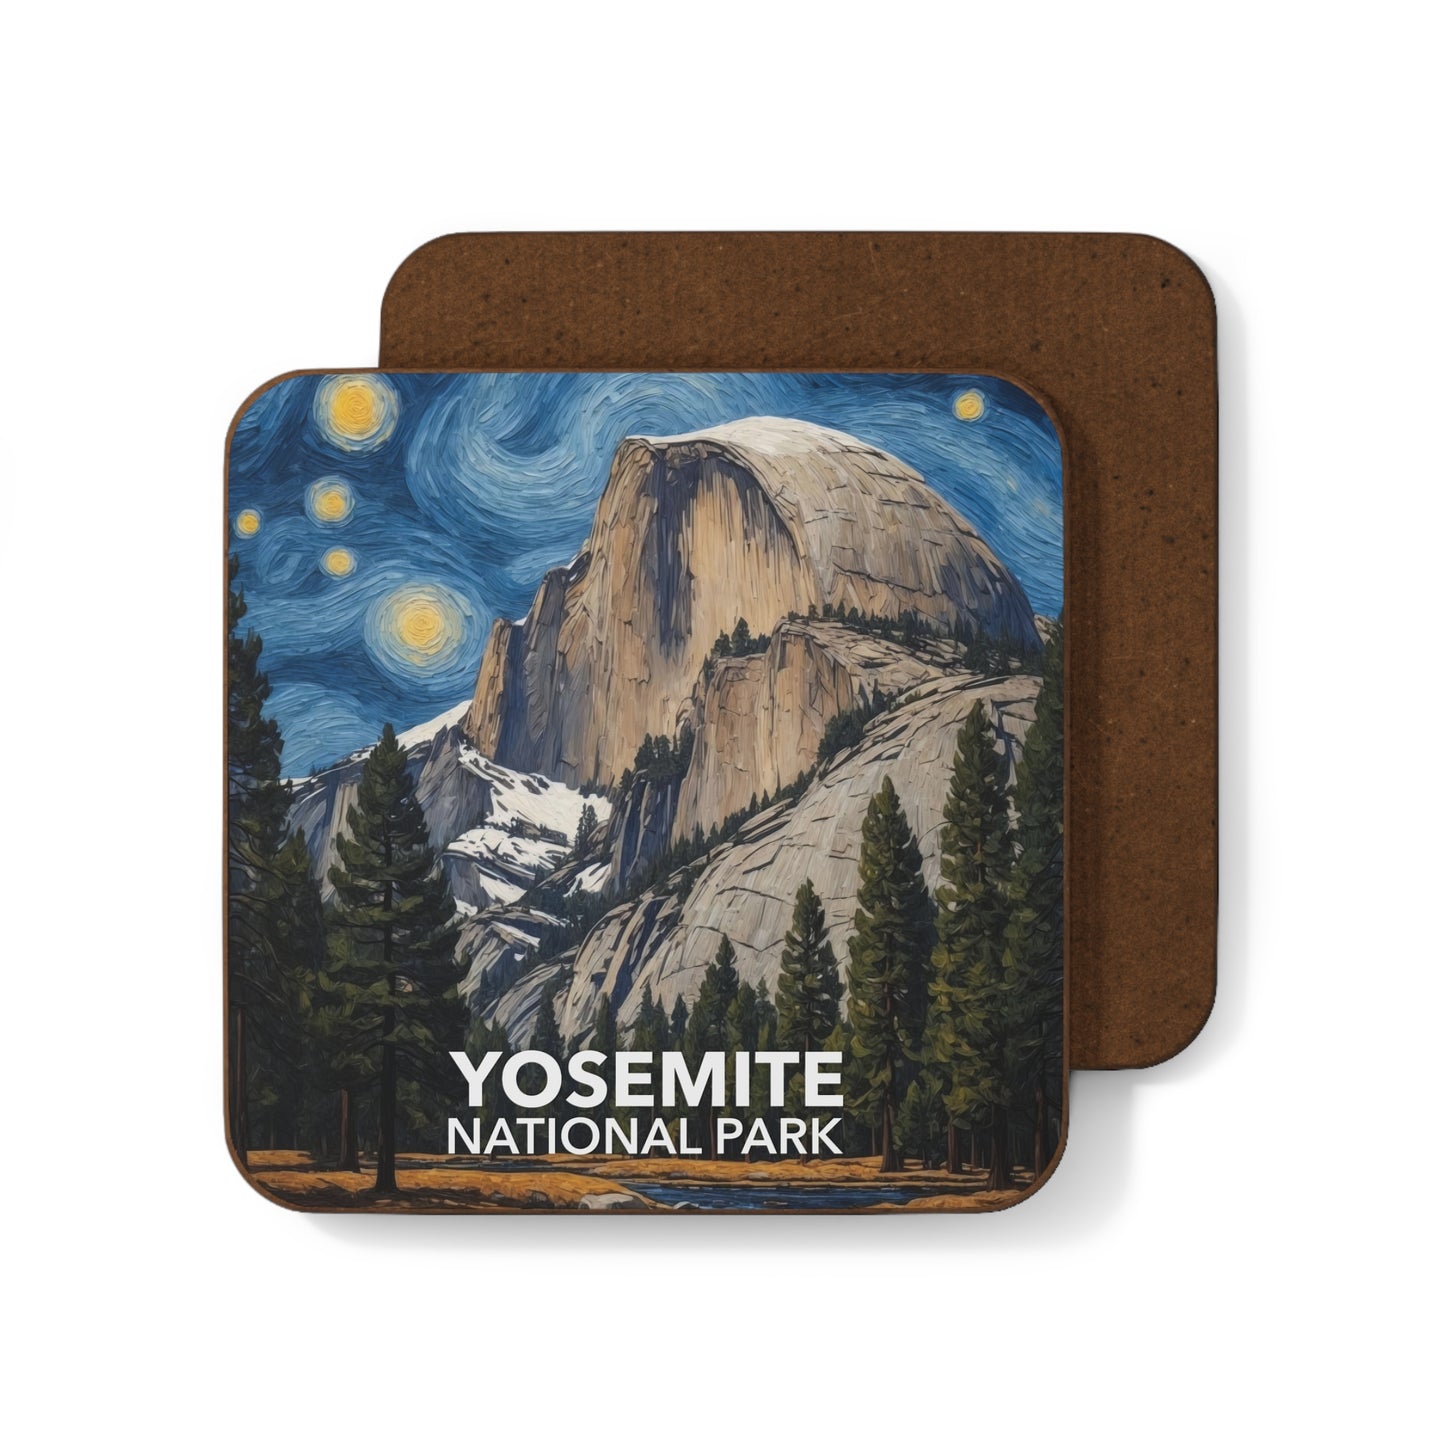 Yosemite National Park Coaster - The Starry Night